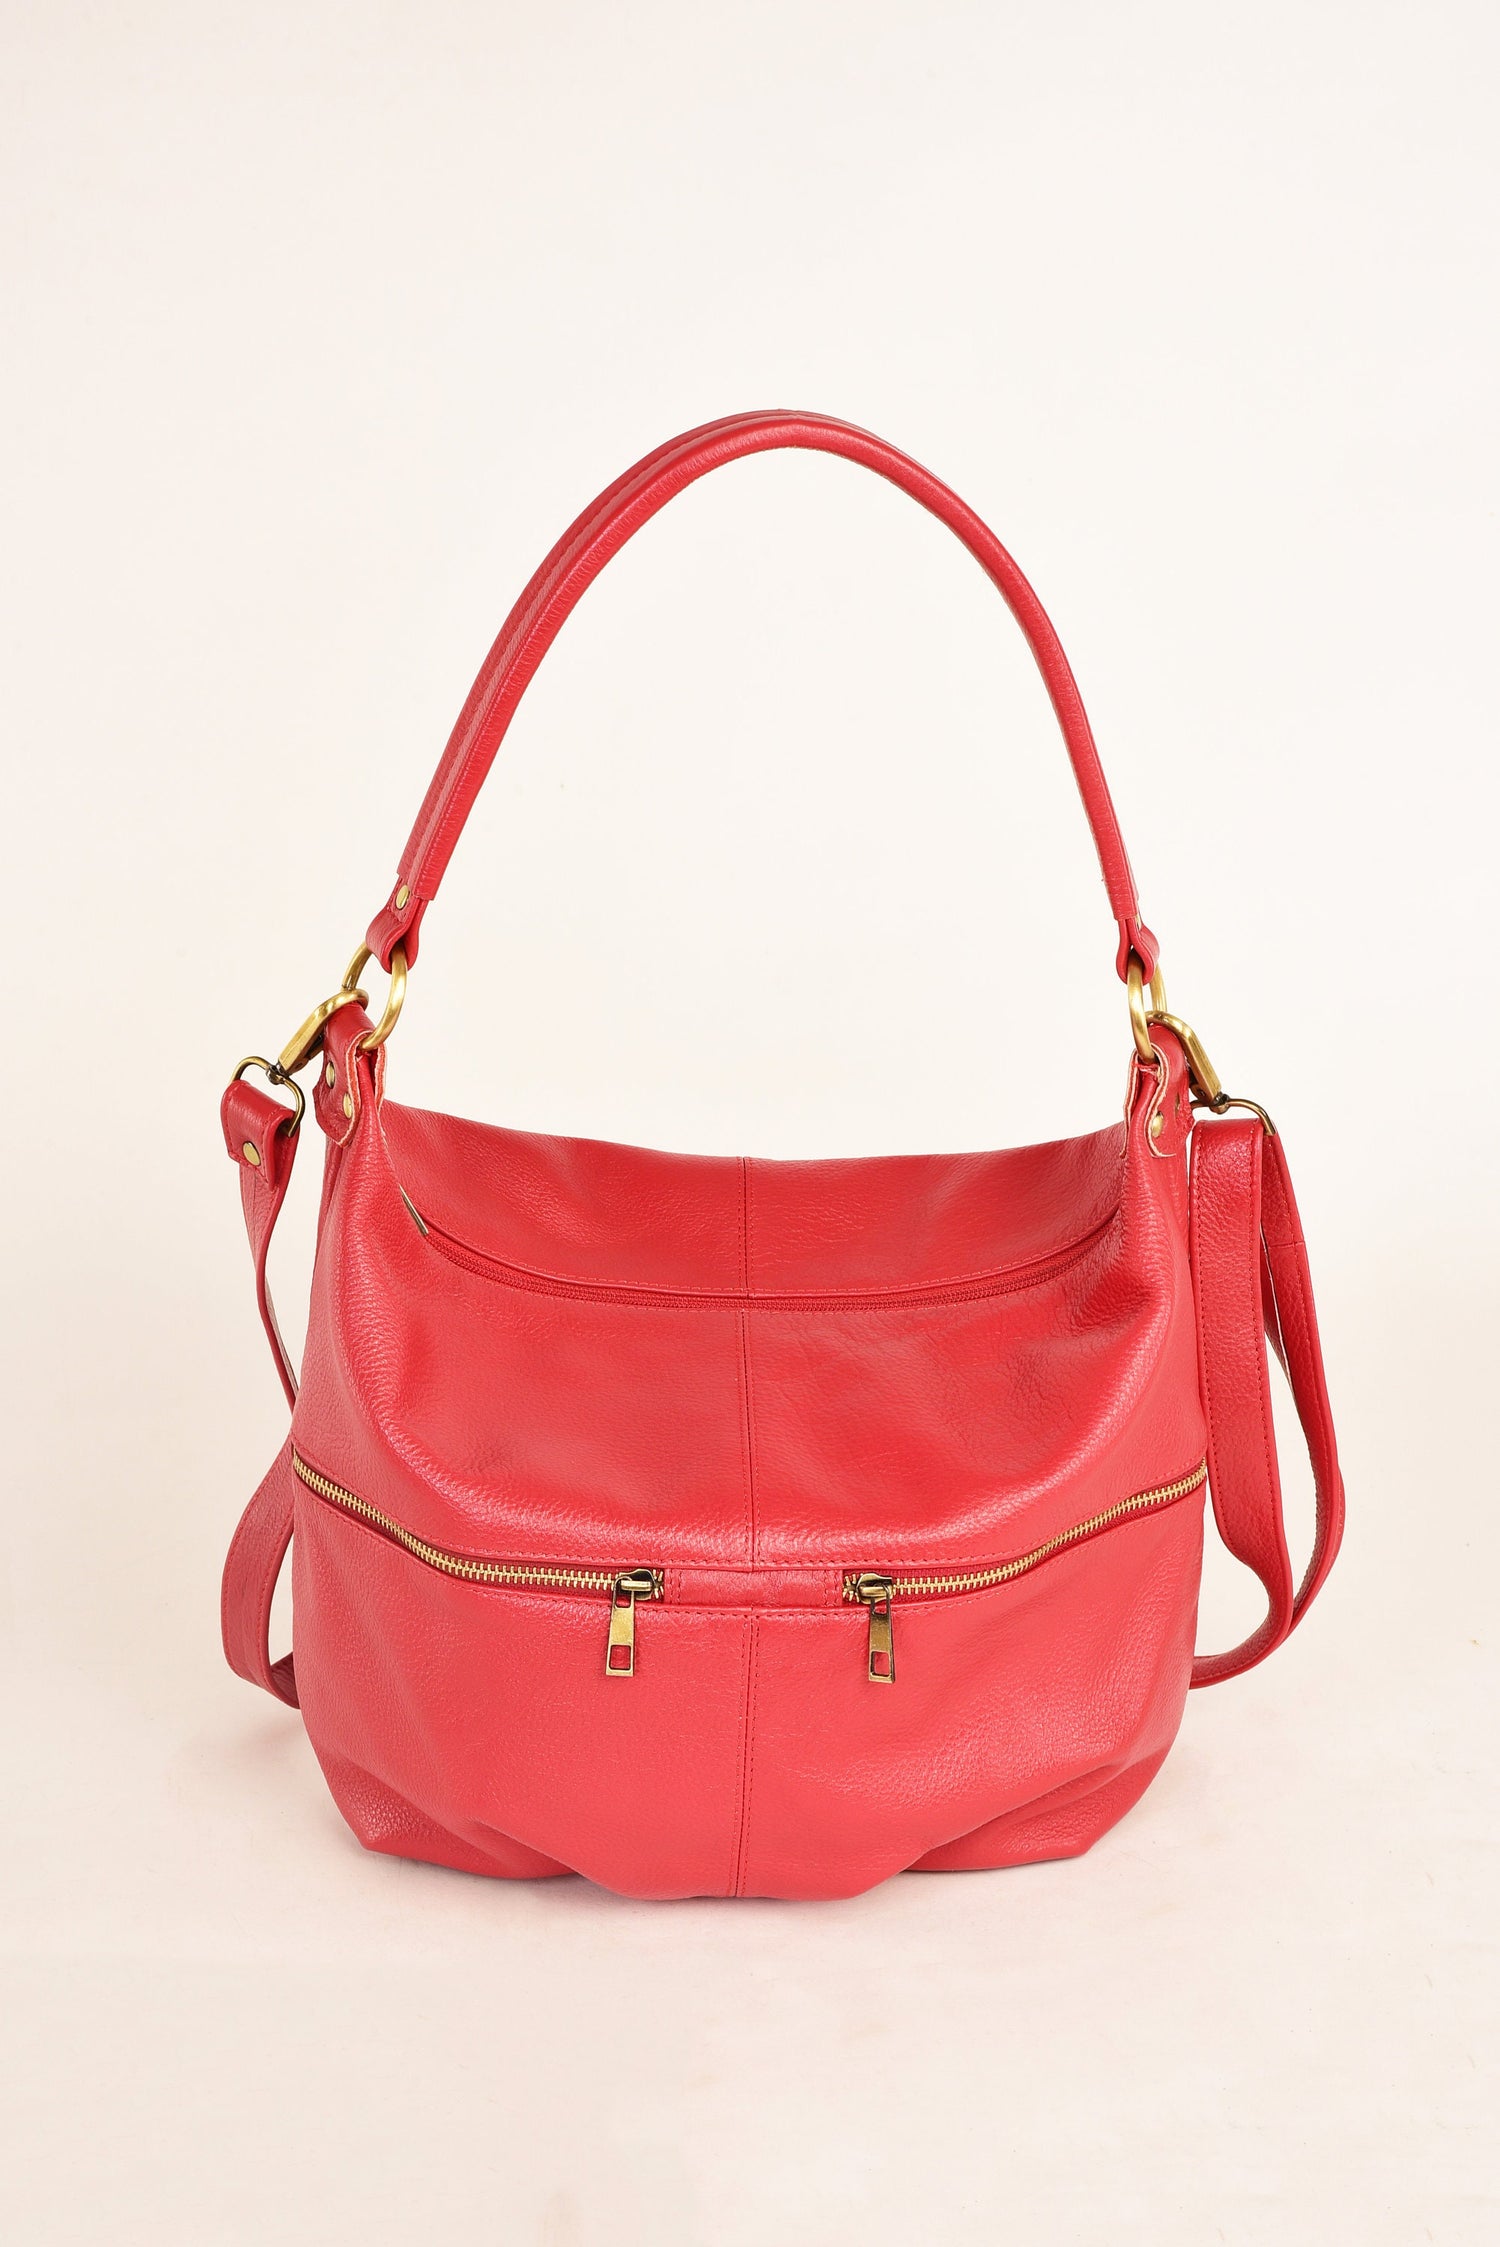 FOSSIL Red Leather Hobo Handbag Purse Bag-NICE | eBay